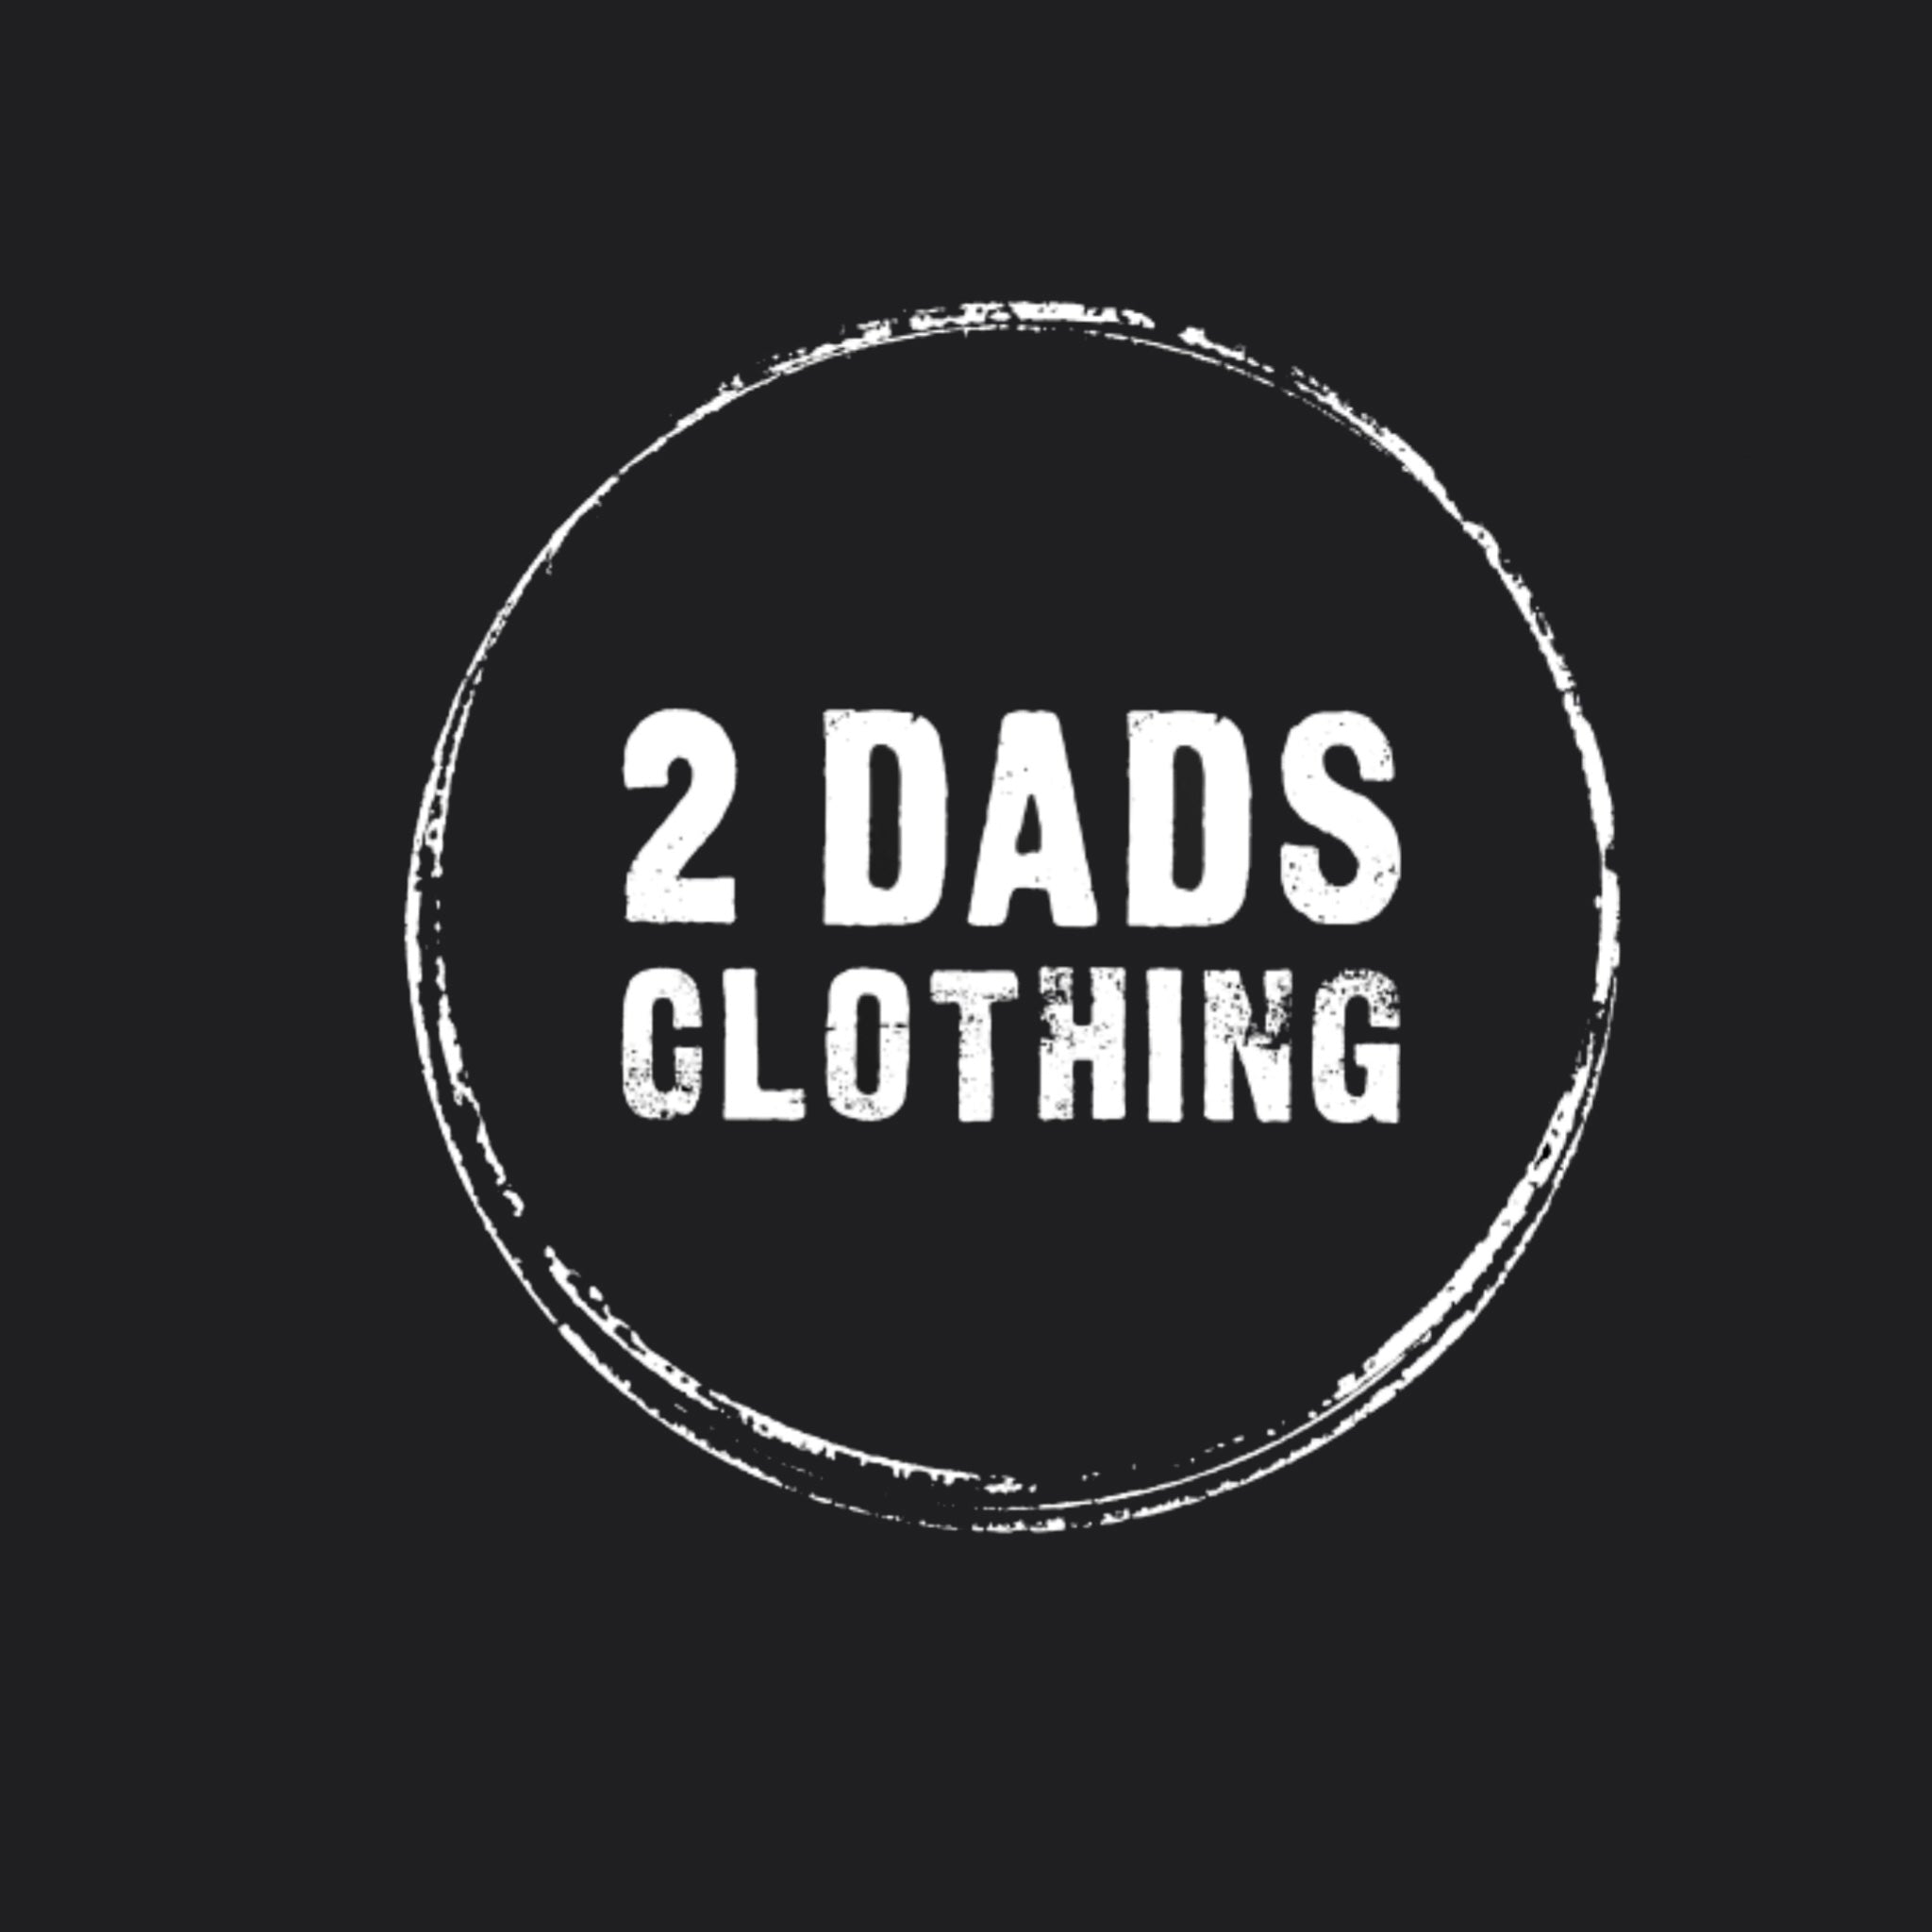 2 Dads Clothing